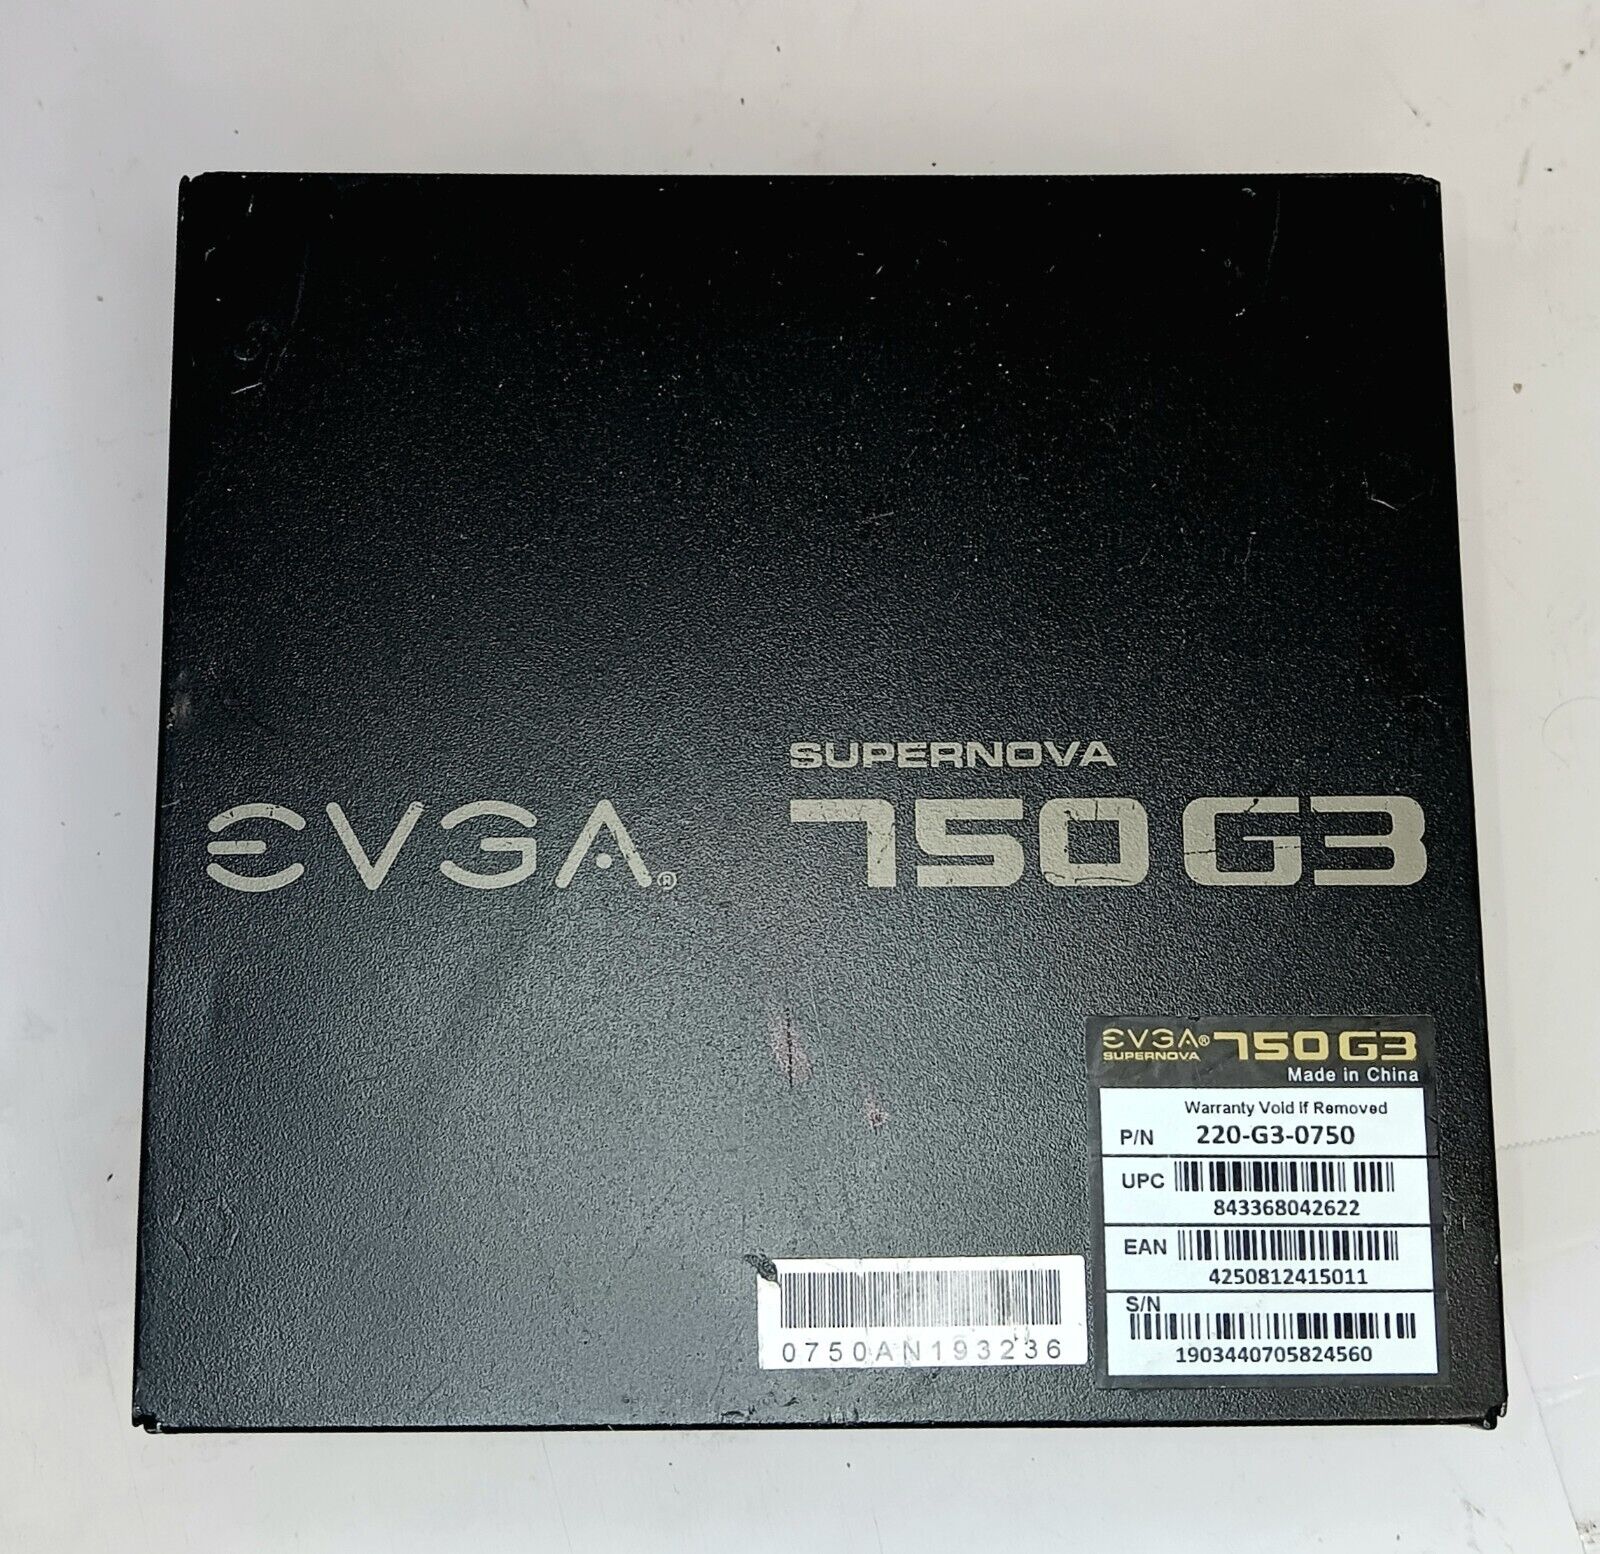 EVGA -G3-0750, SUPERNOVA 750 G3, 750W GAMING POWER SUPPLY UNIT, 80 PLUS GOLD